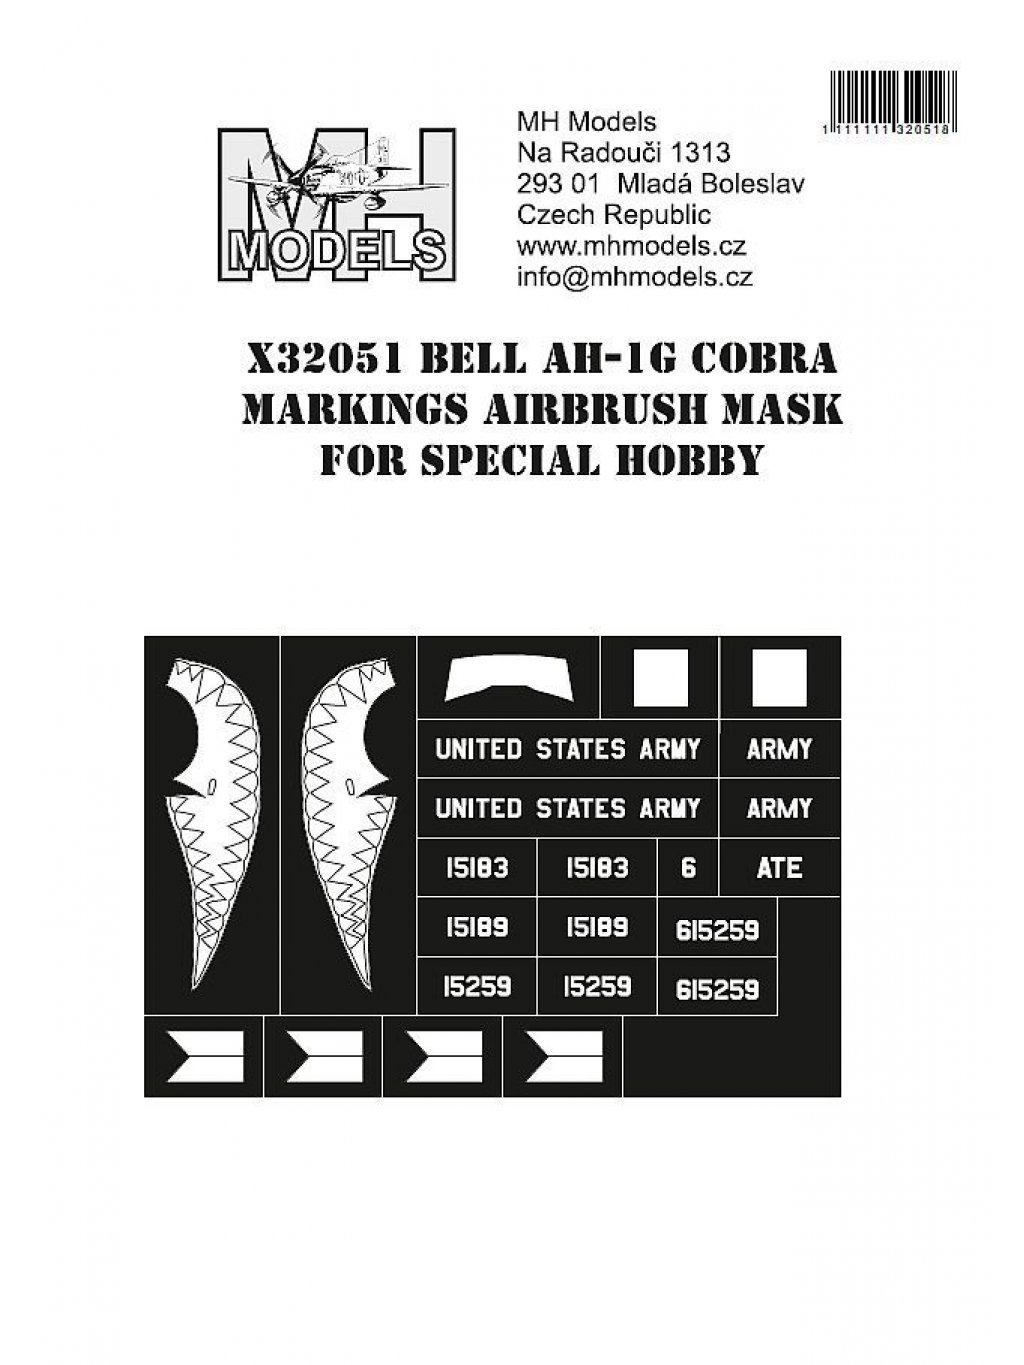 Bell AH-1G Cobra Markings Airbrush Mask for Special Hobby